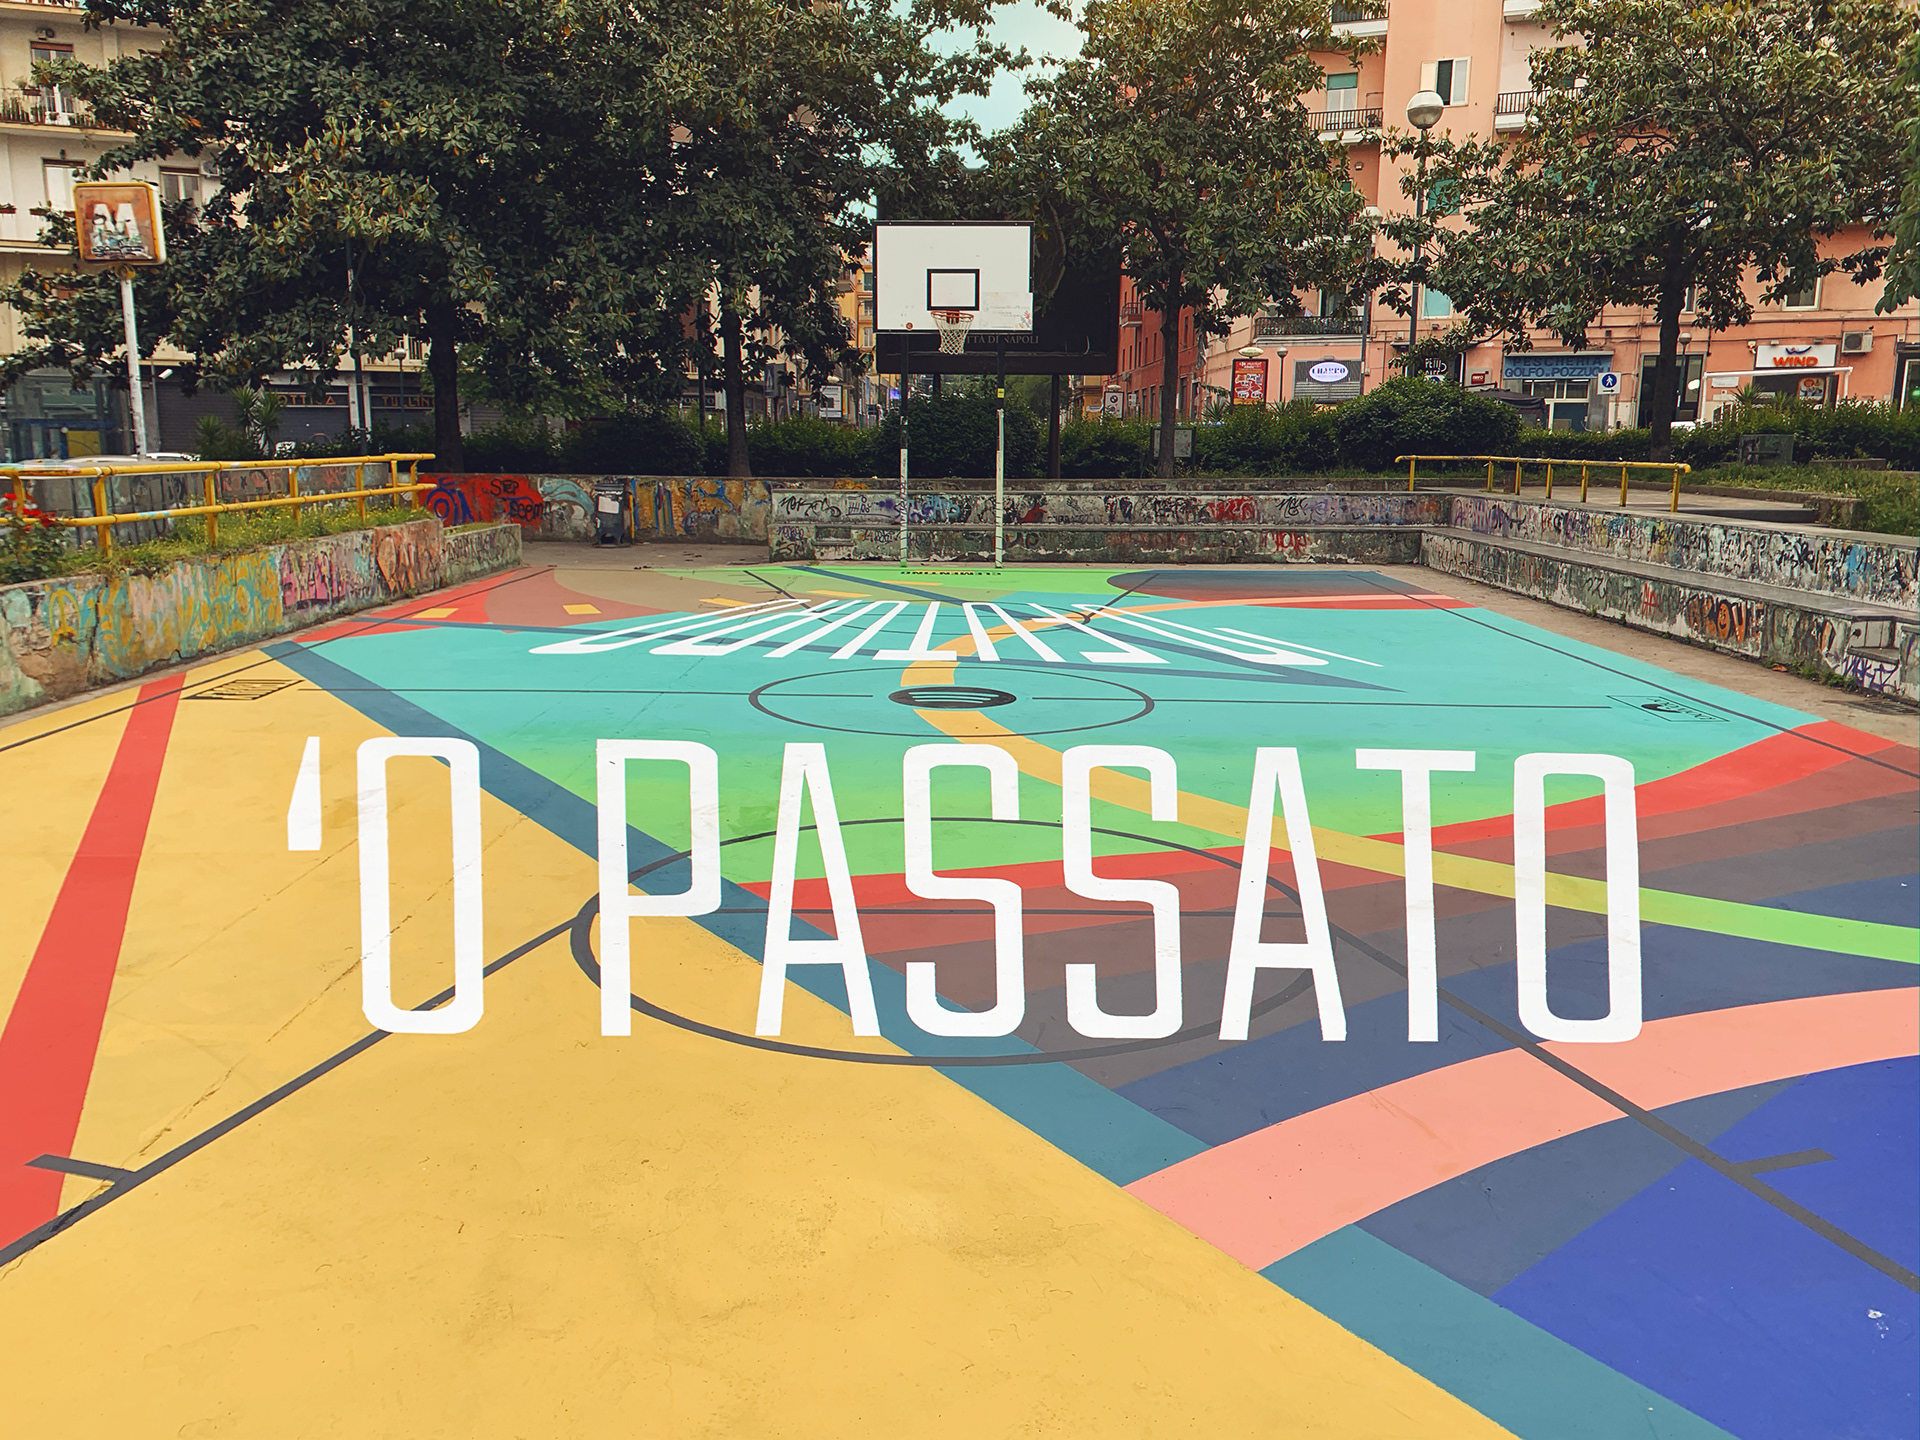 Illusory Basketball Court: O Passato / 'O Futuro - Street Art 